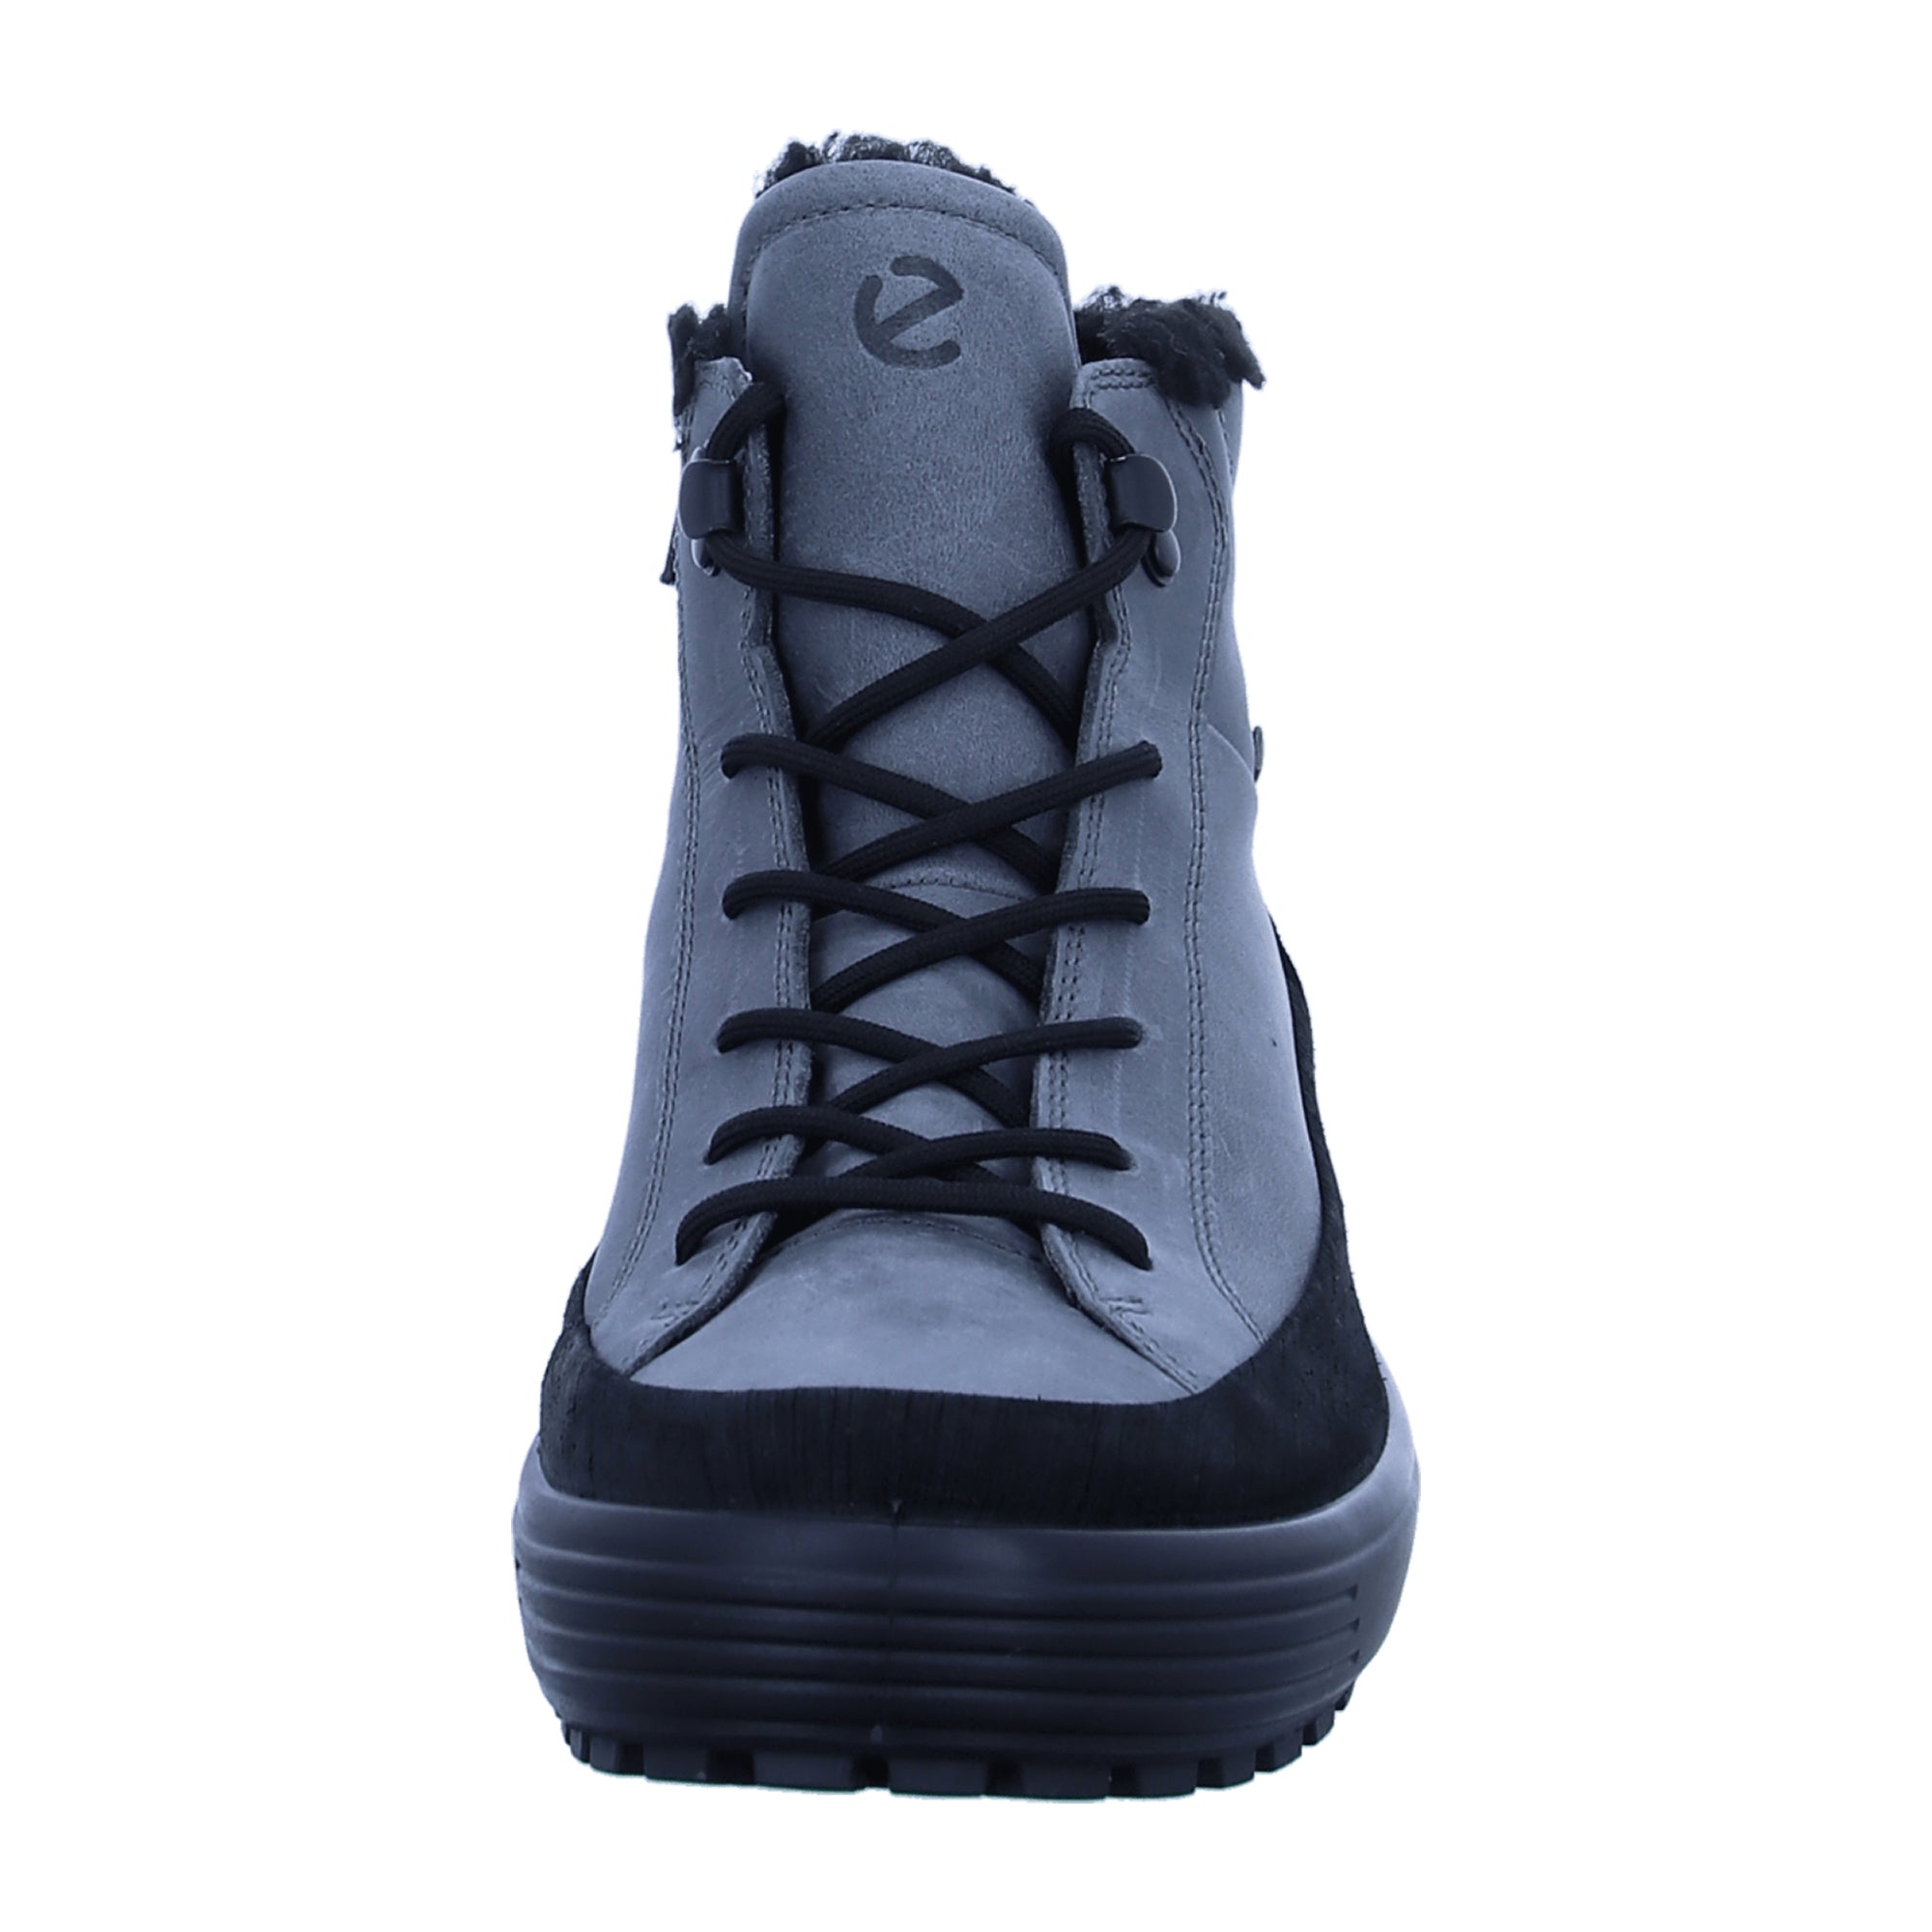 Ecco Men's 450444 Sneakers, Stylish Grey - Durable & Comfortable